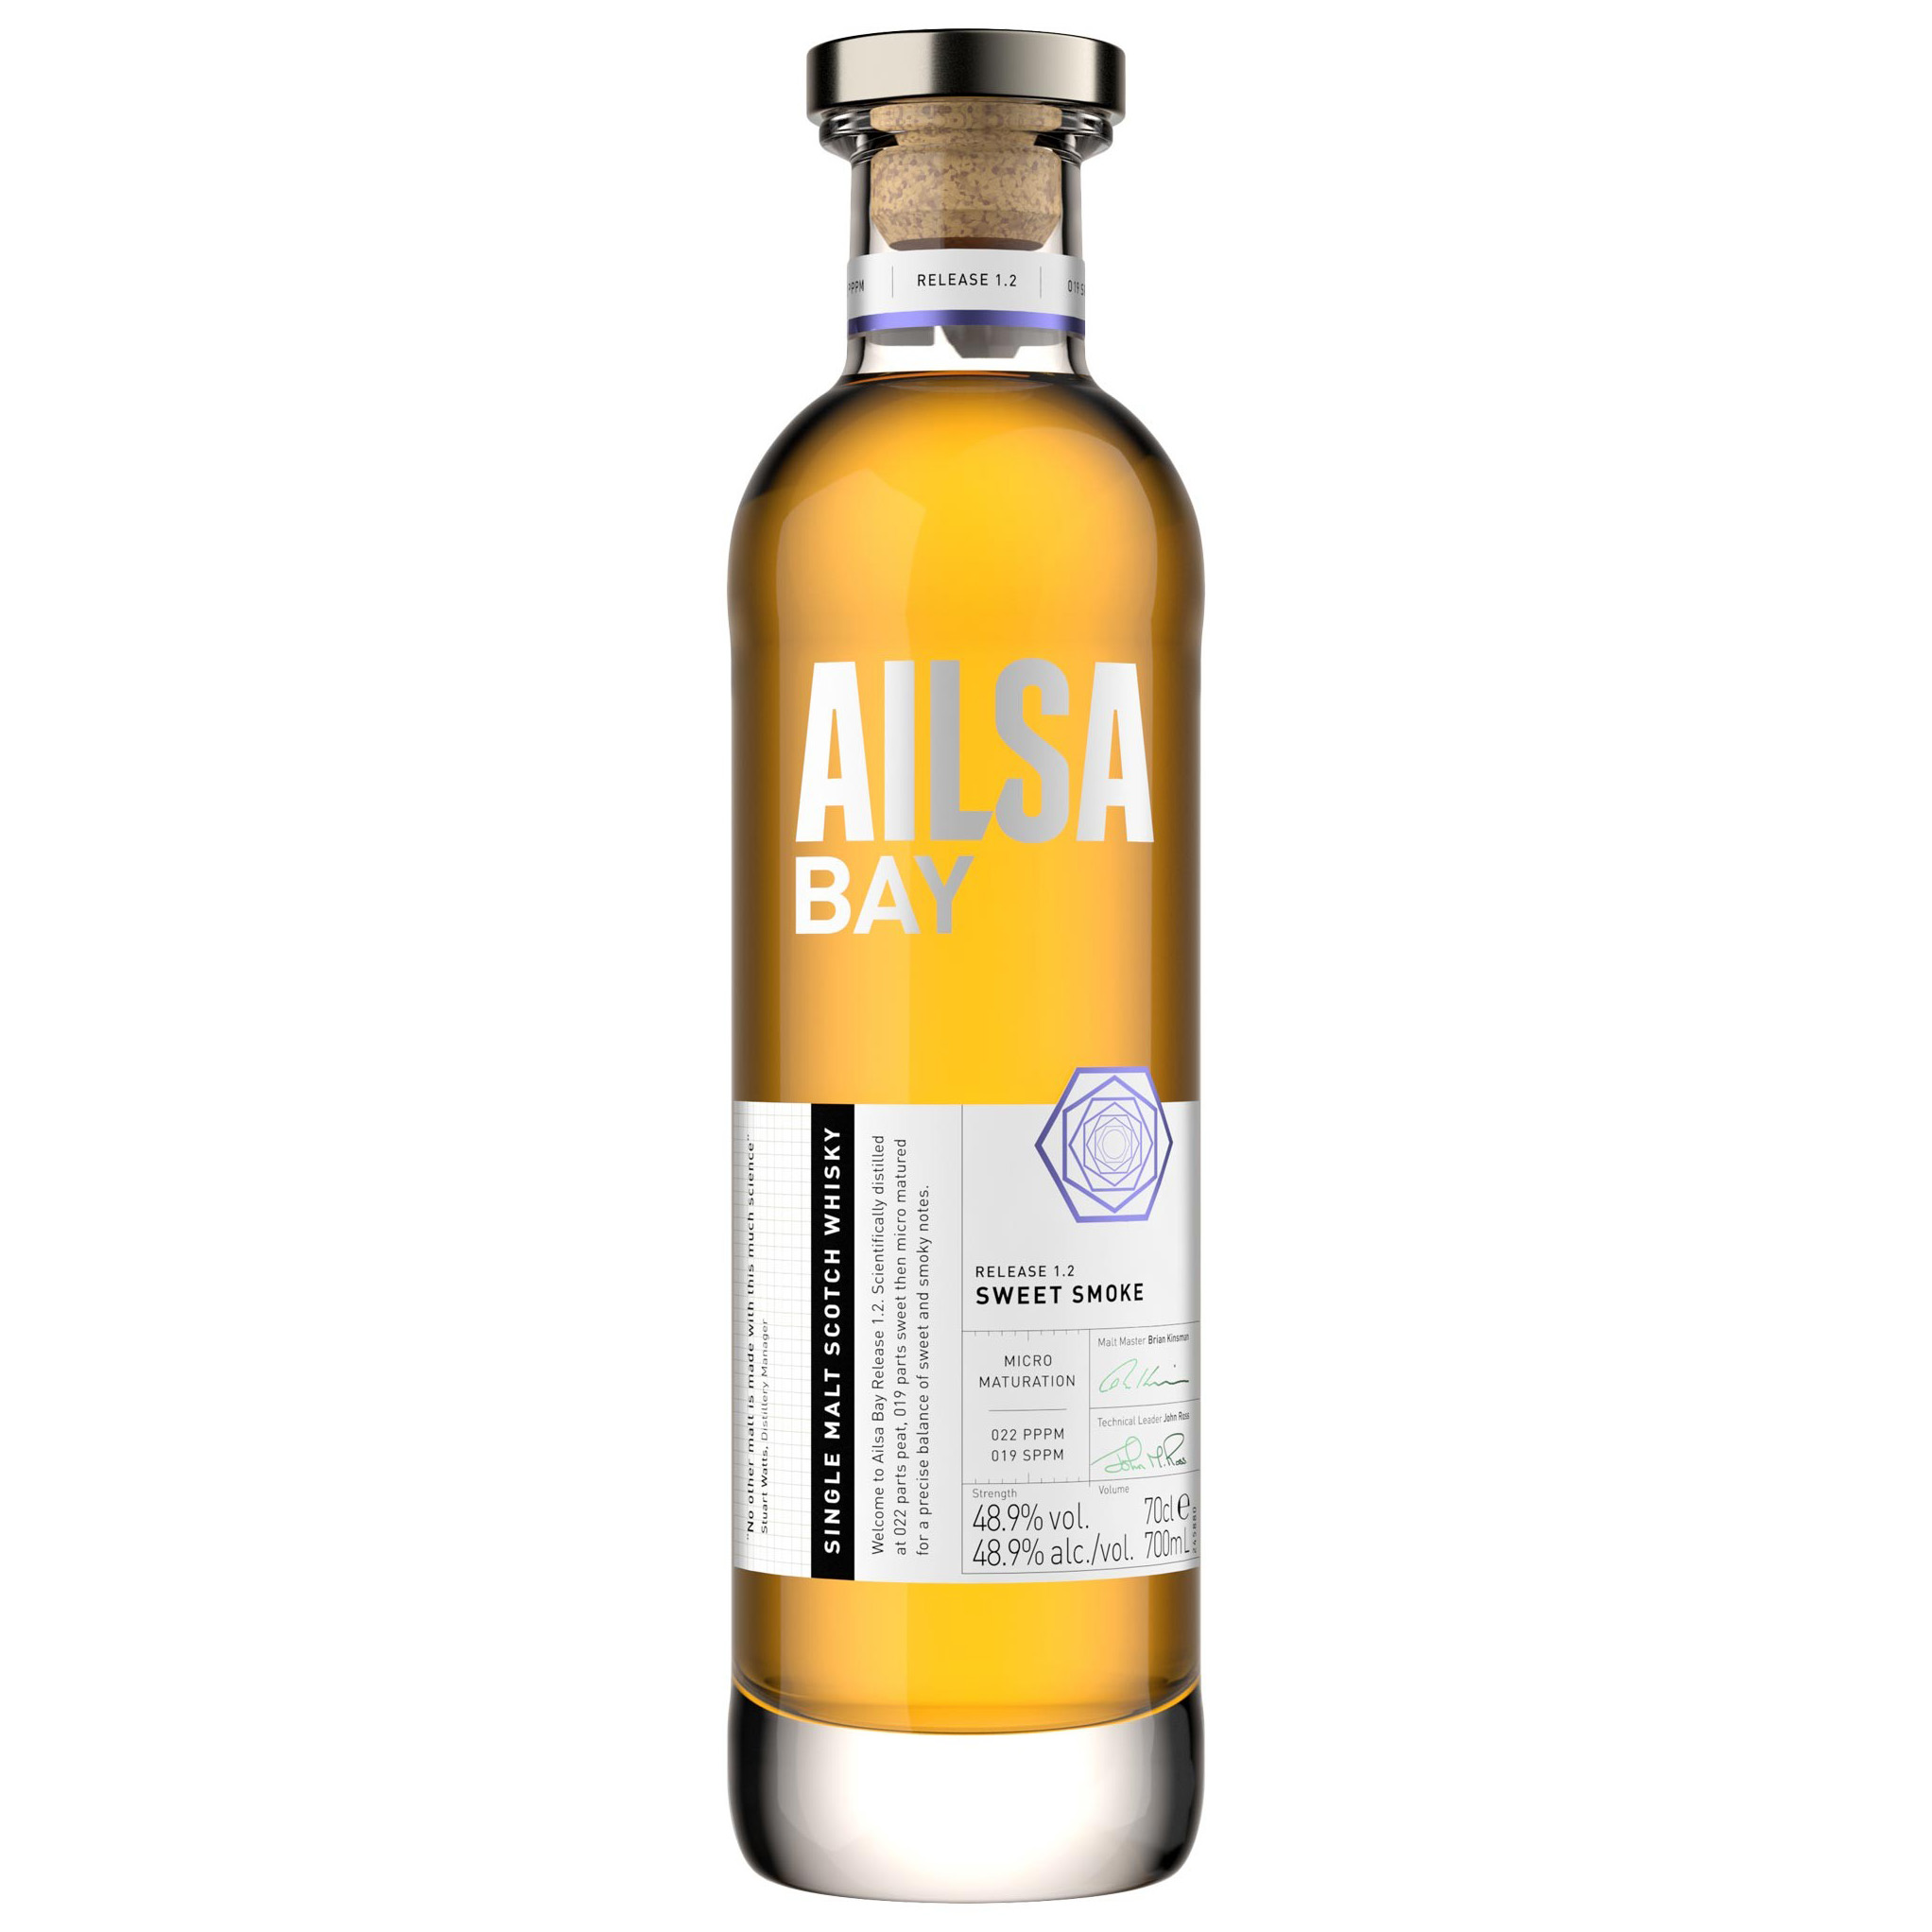 Secondery ailsabay-new-bottle2.jpg